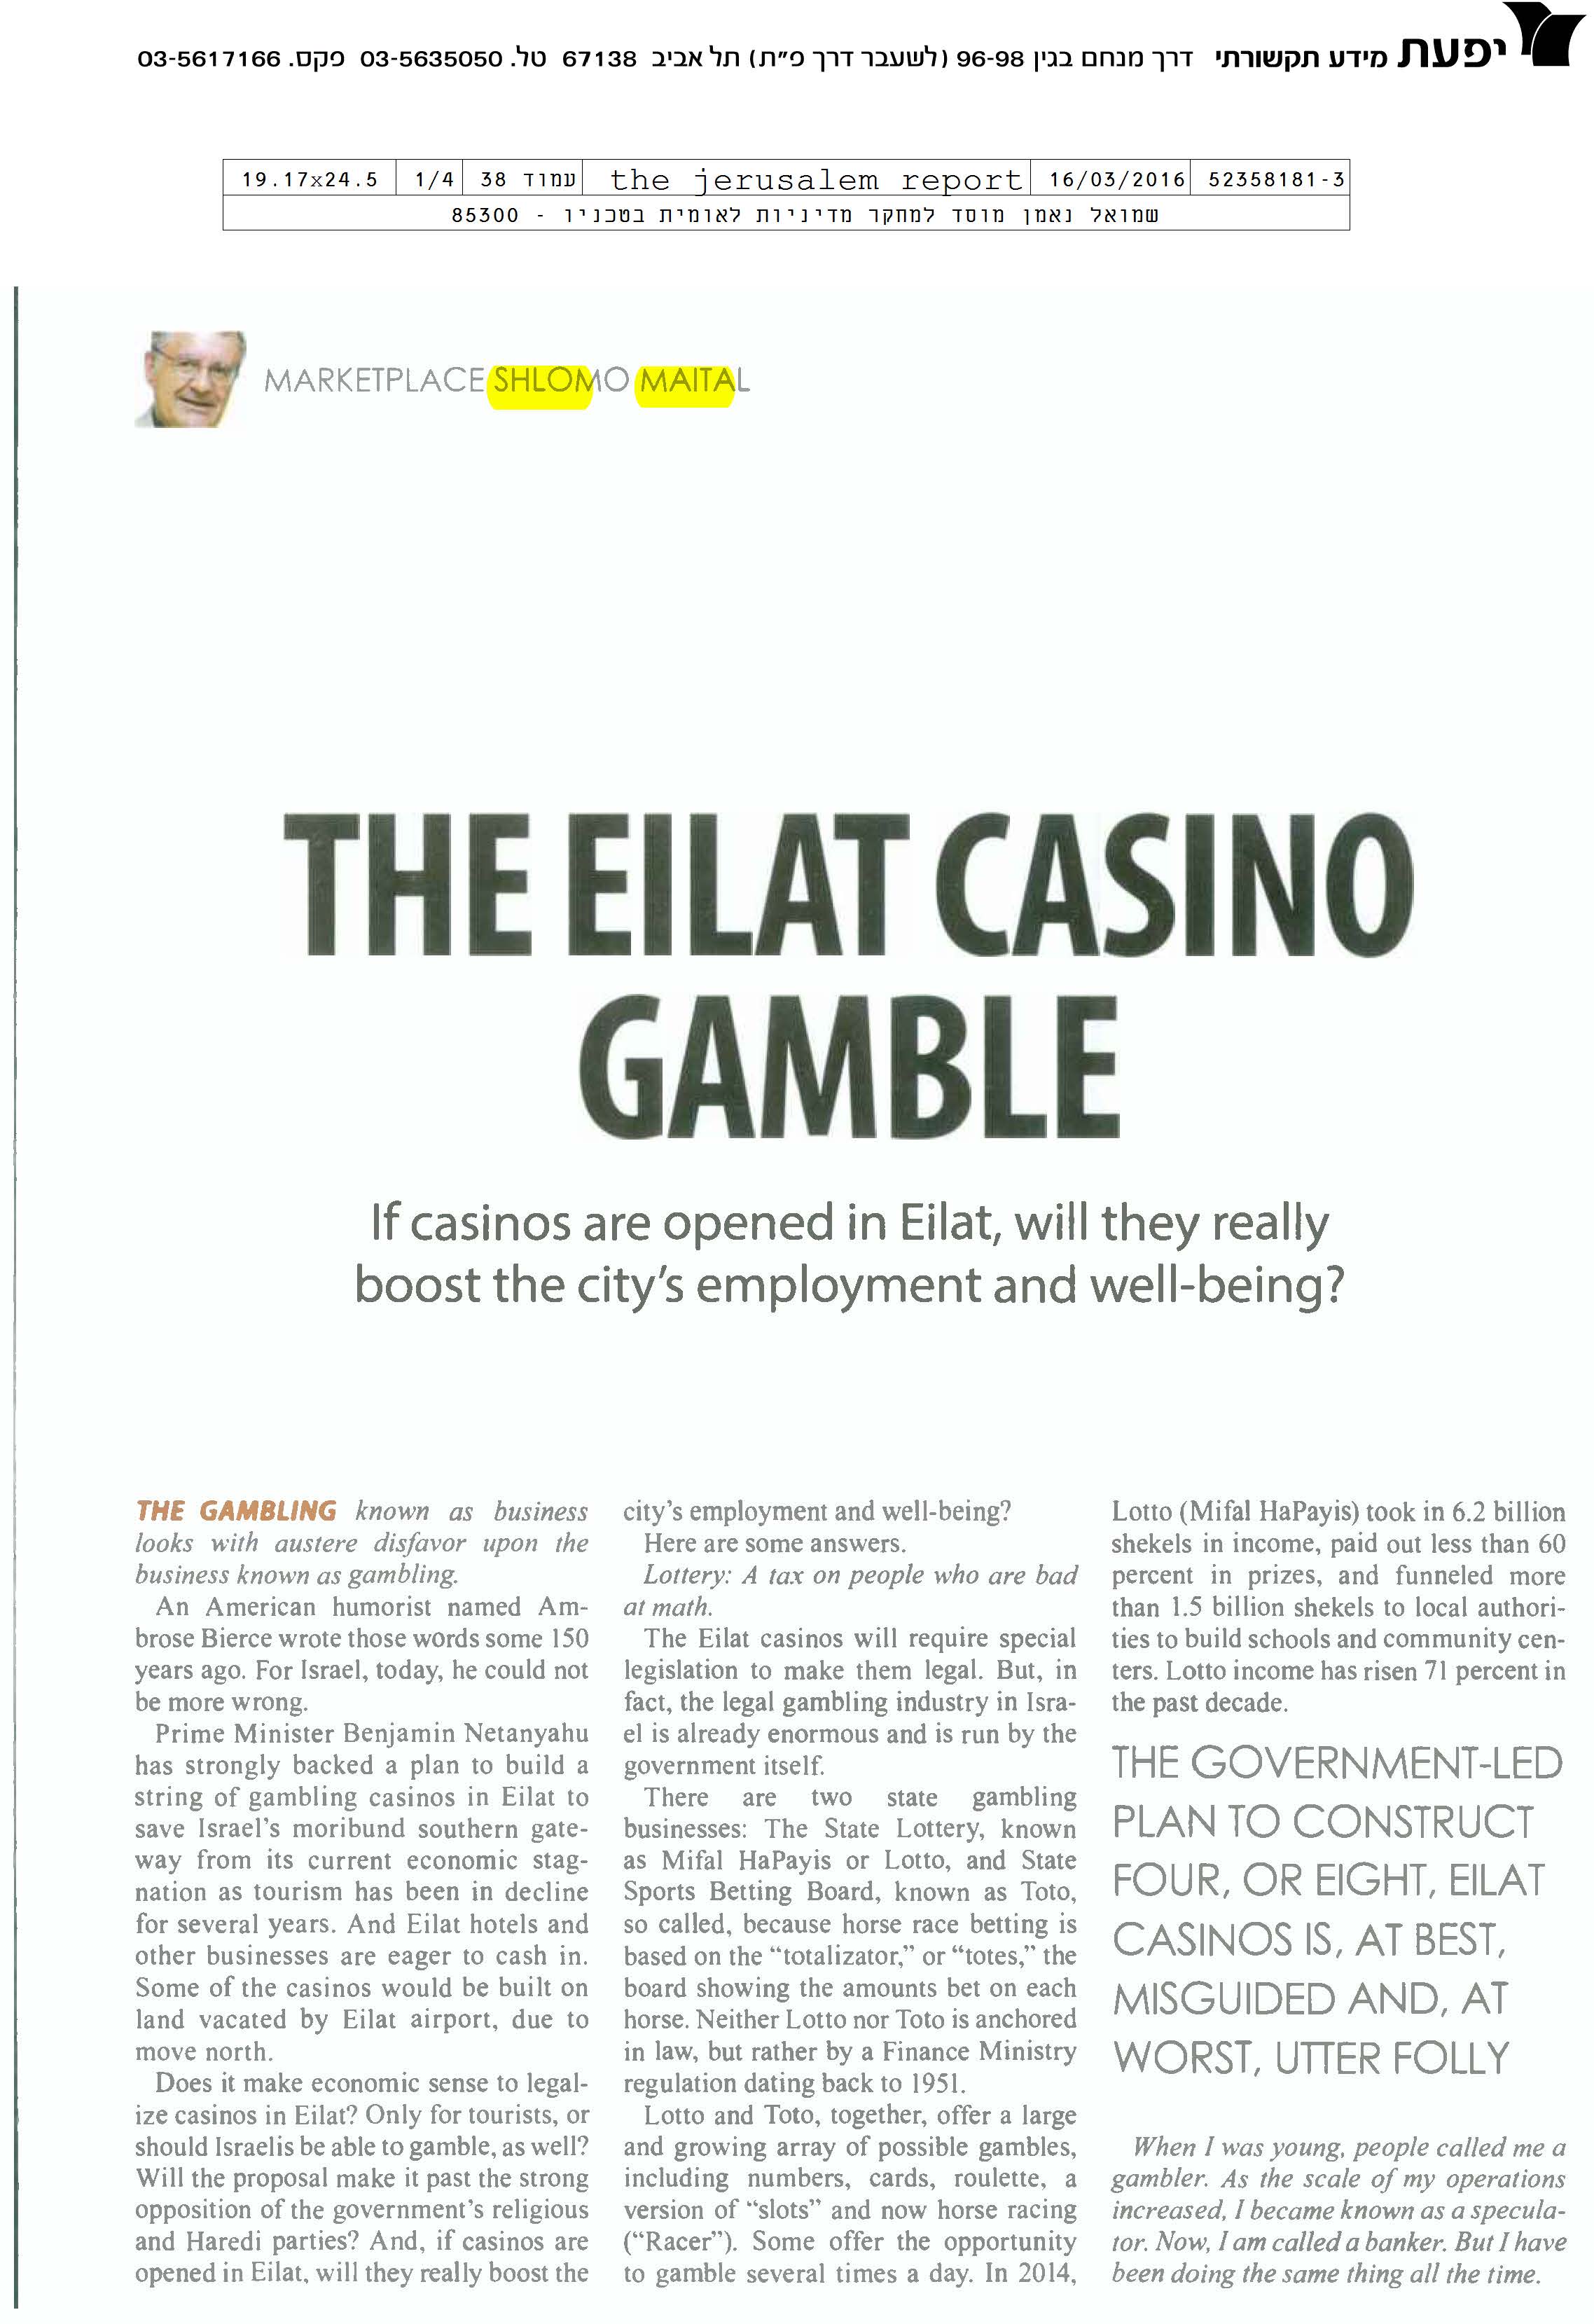 The Eilat Casino Gamble